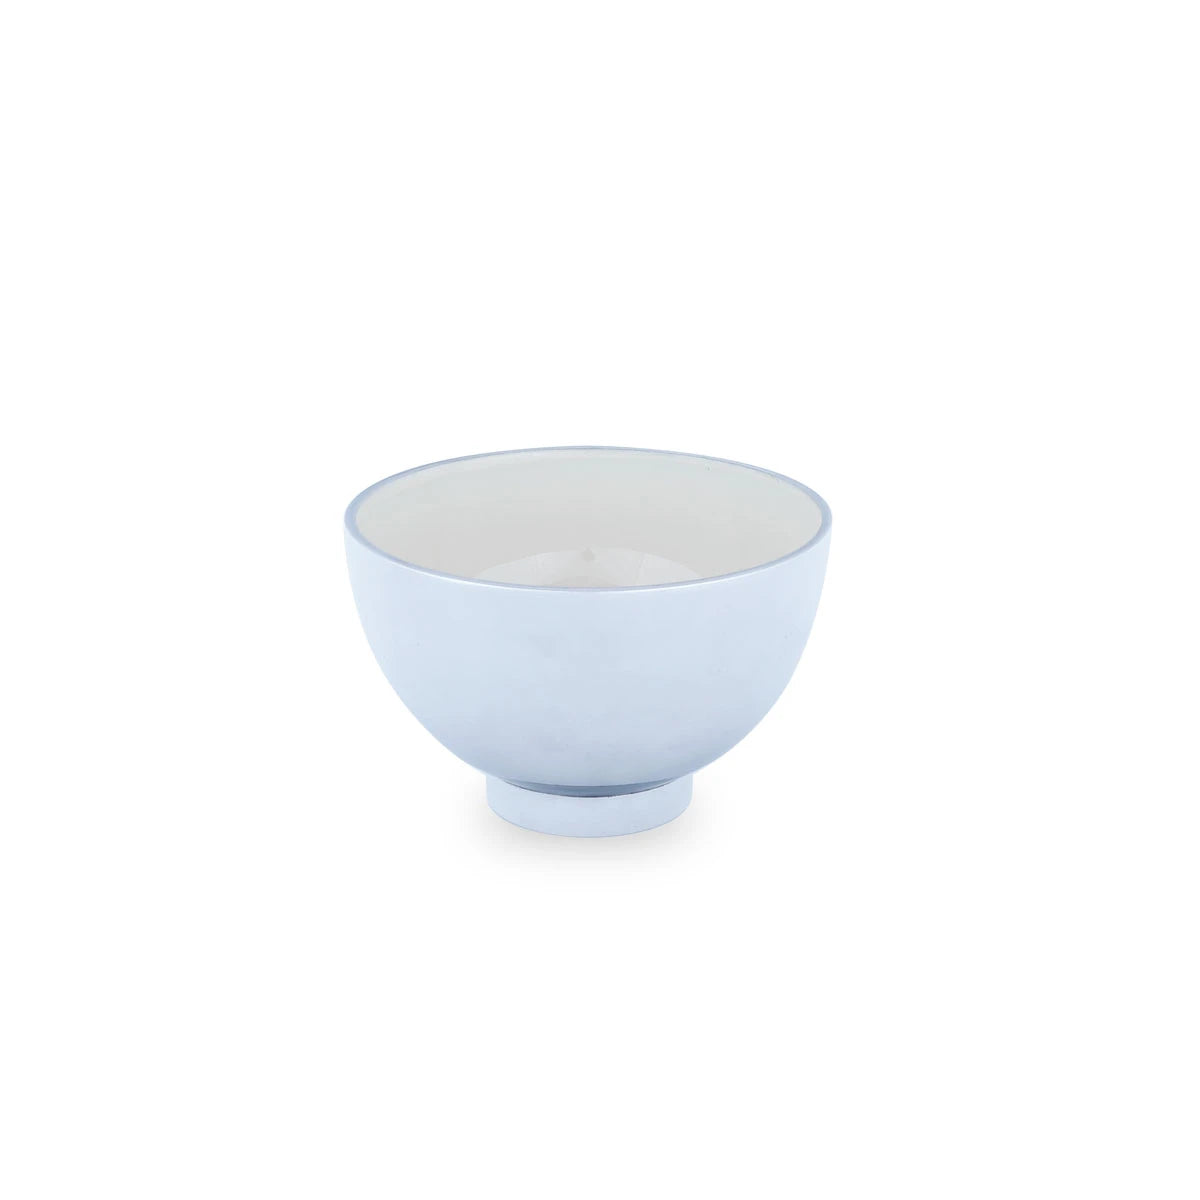 Iron Powder-Coated Decorative Bowl - White Color